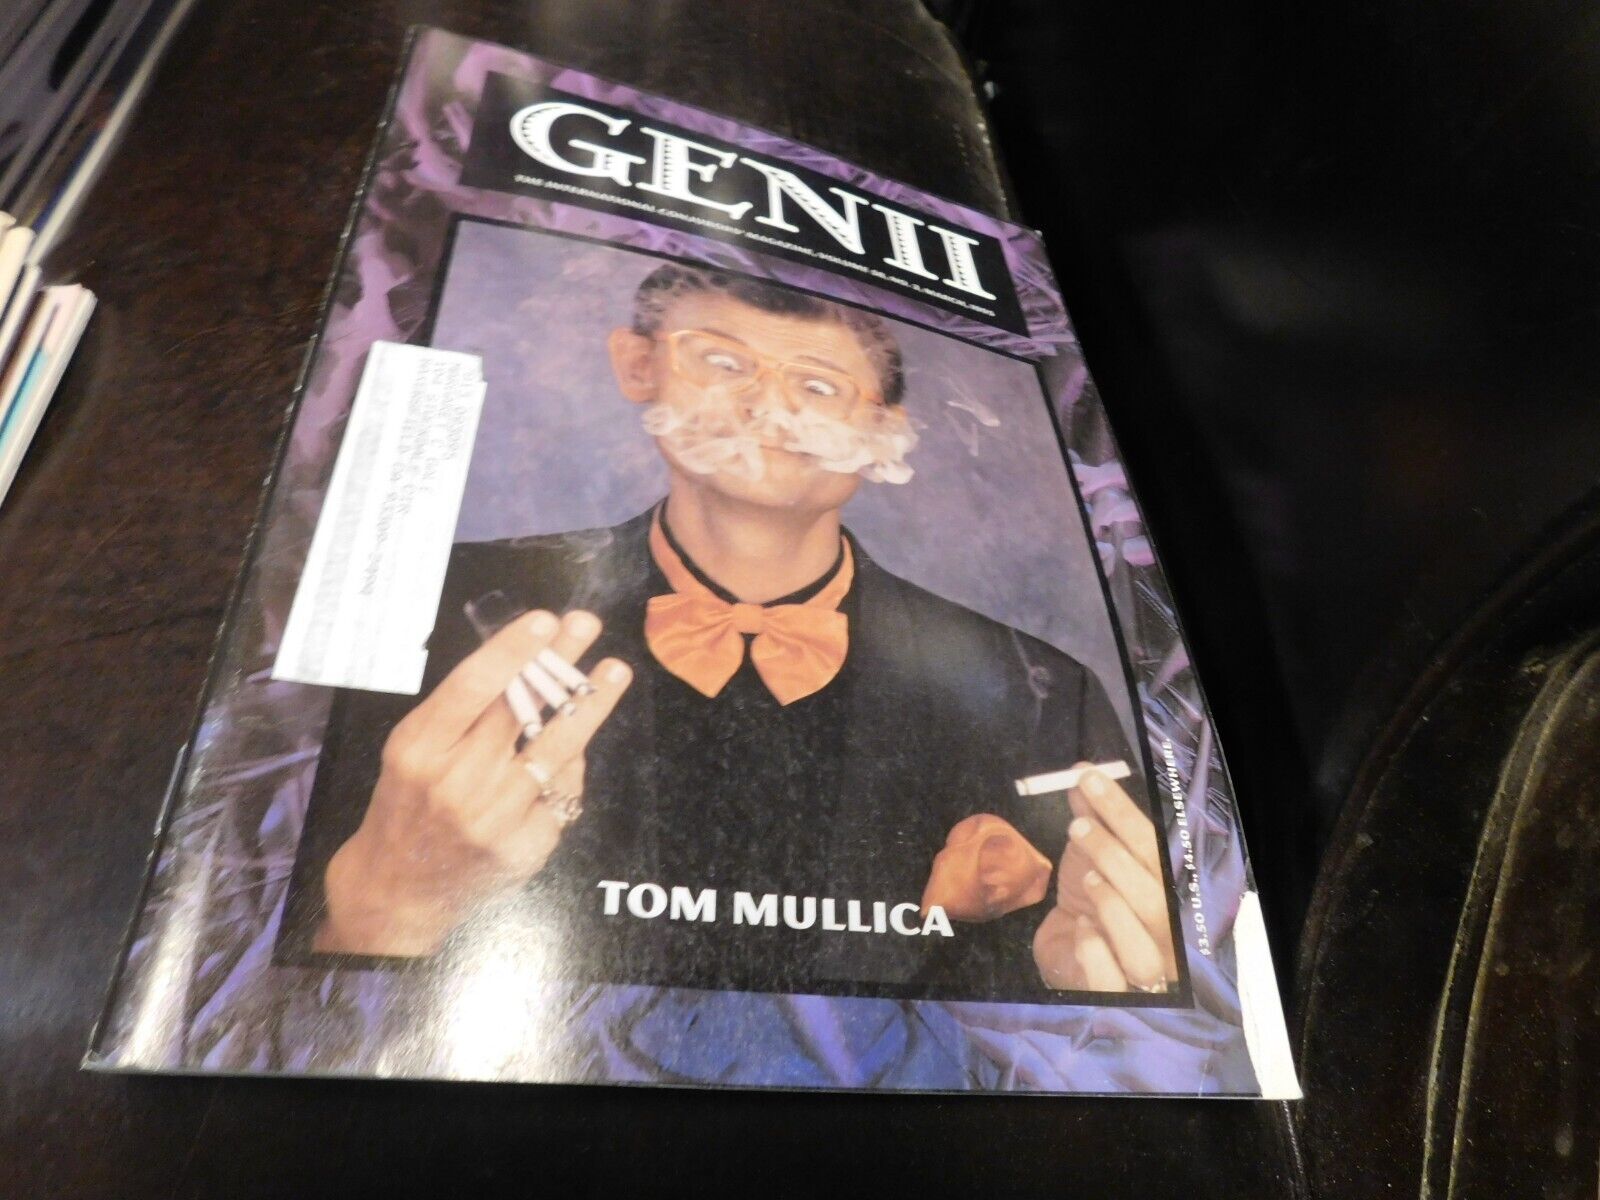 Genii Magic Magazine For Magicians 1995 March